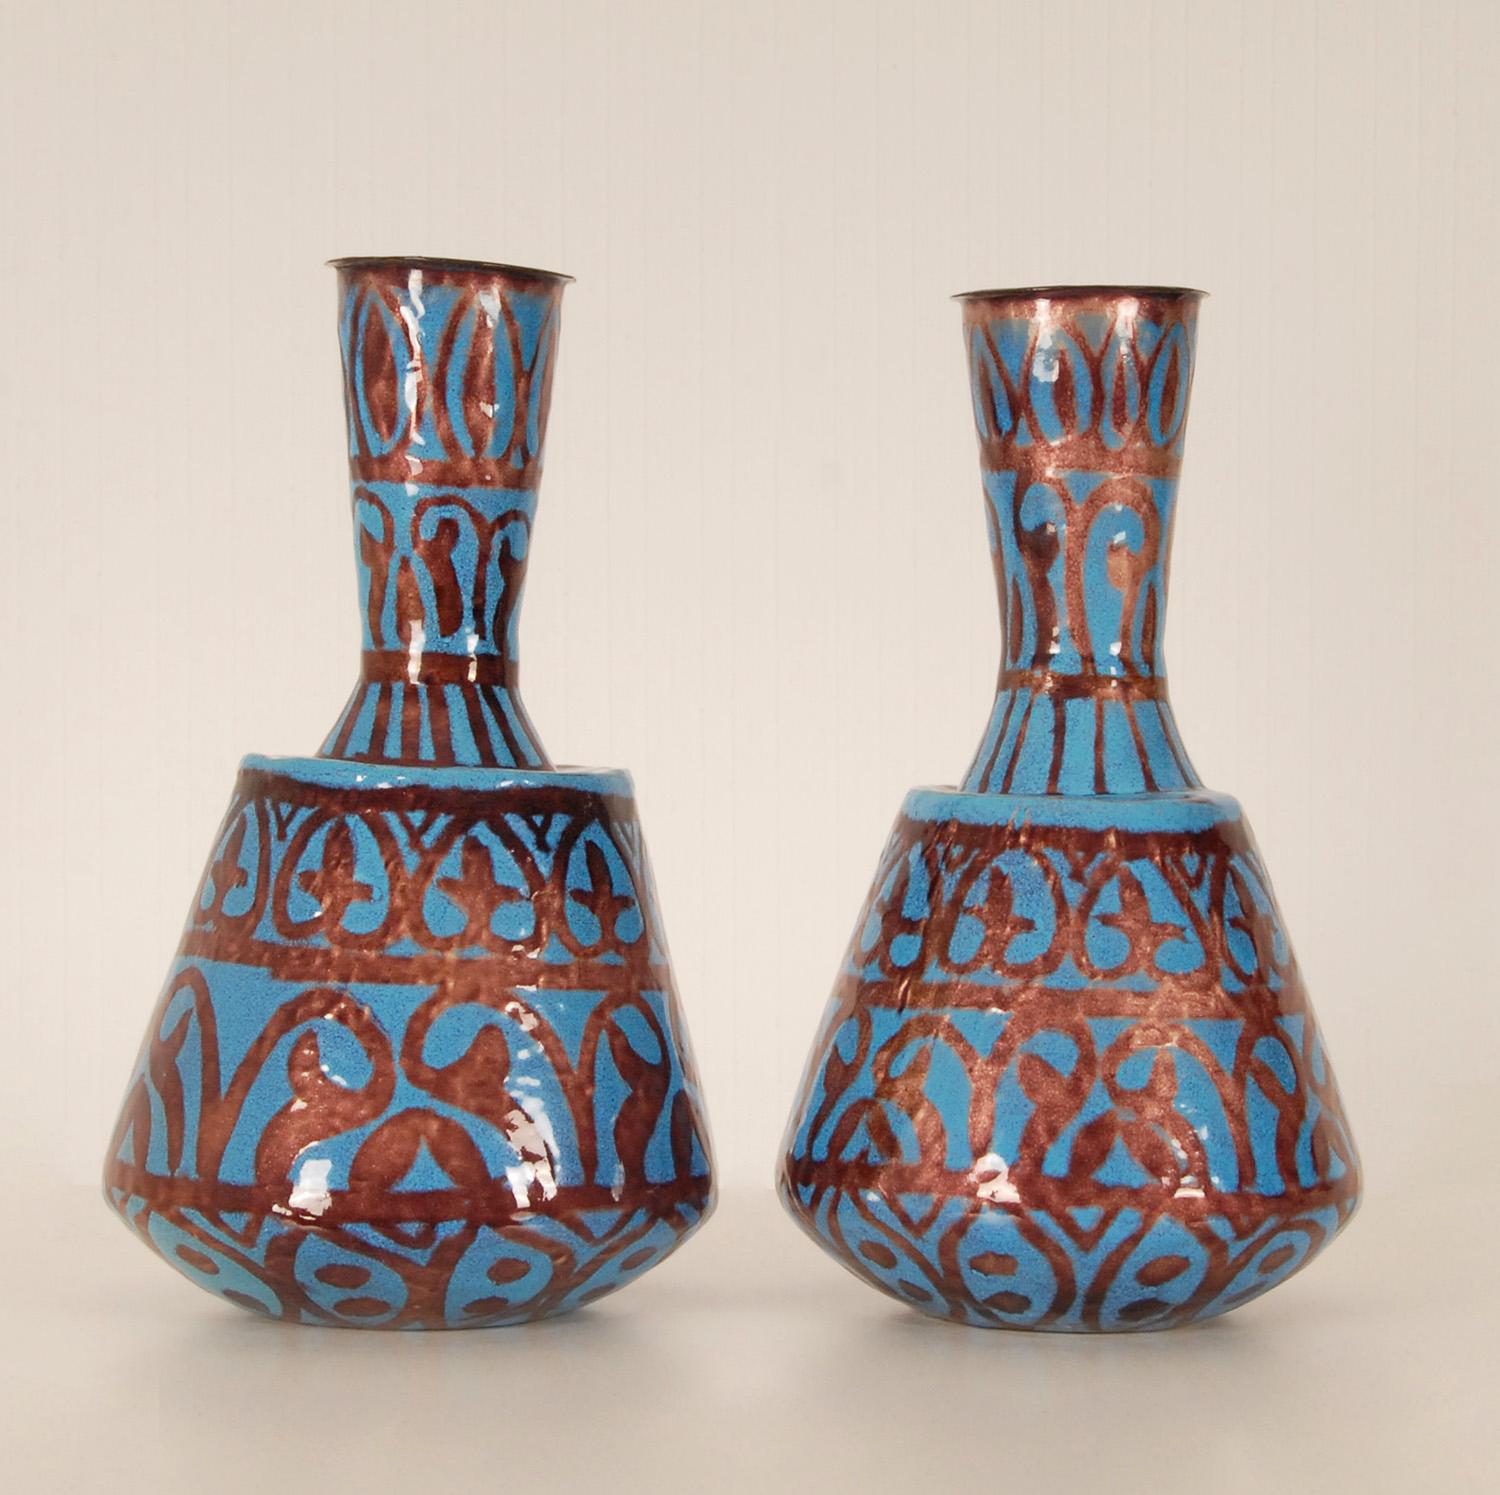 Early 20th Century Art Deco Vases Turqoise Blue and Iridescent Enamel on Copper Geometric Design Va For Sale